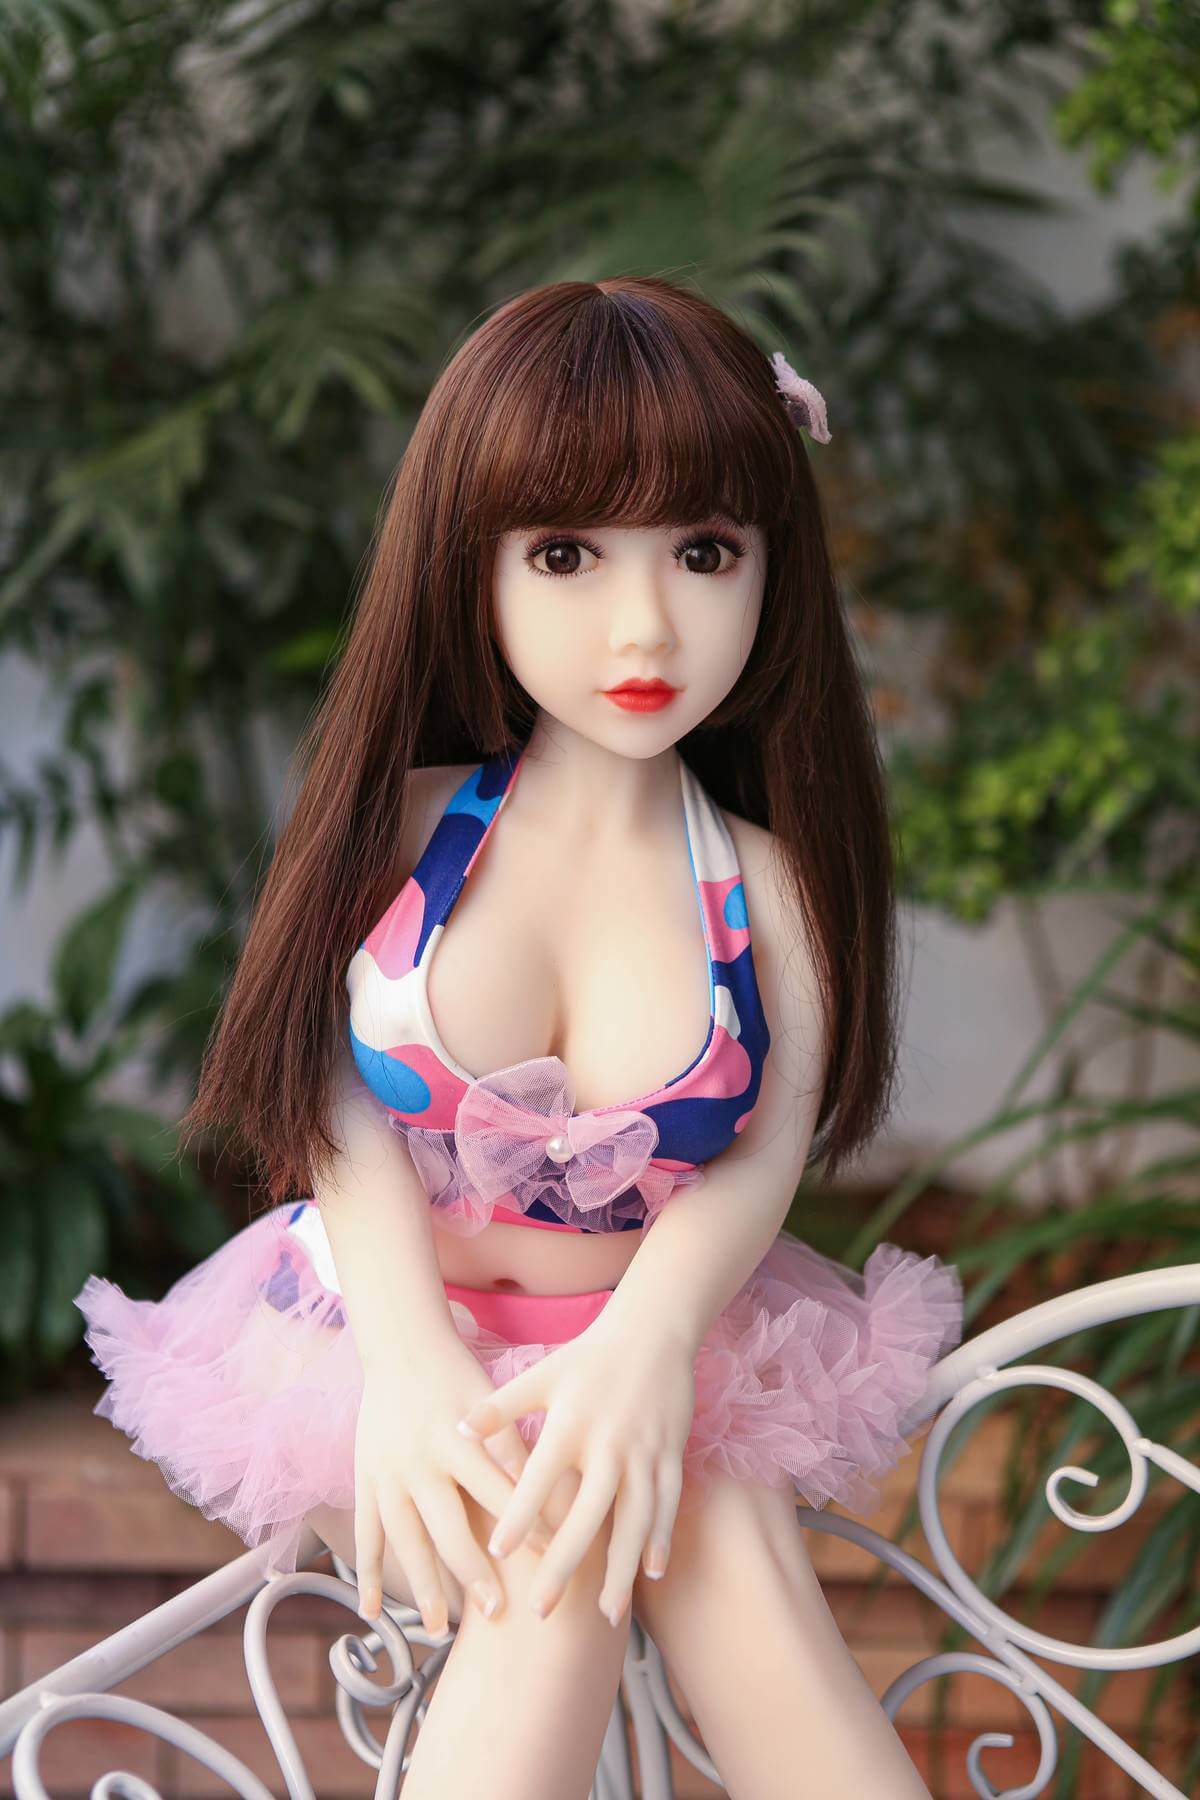 Sex Doll Small Love Doll Azm 129 8